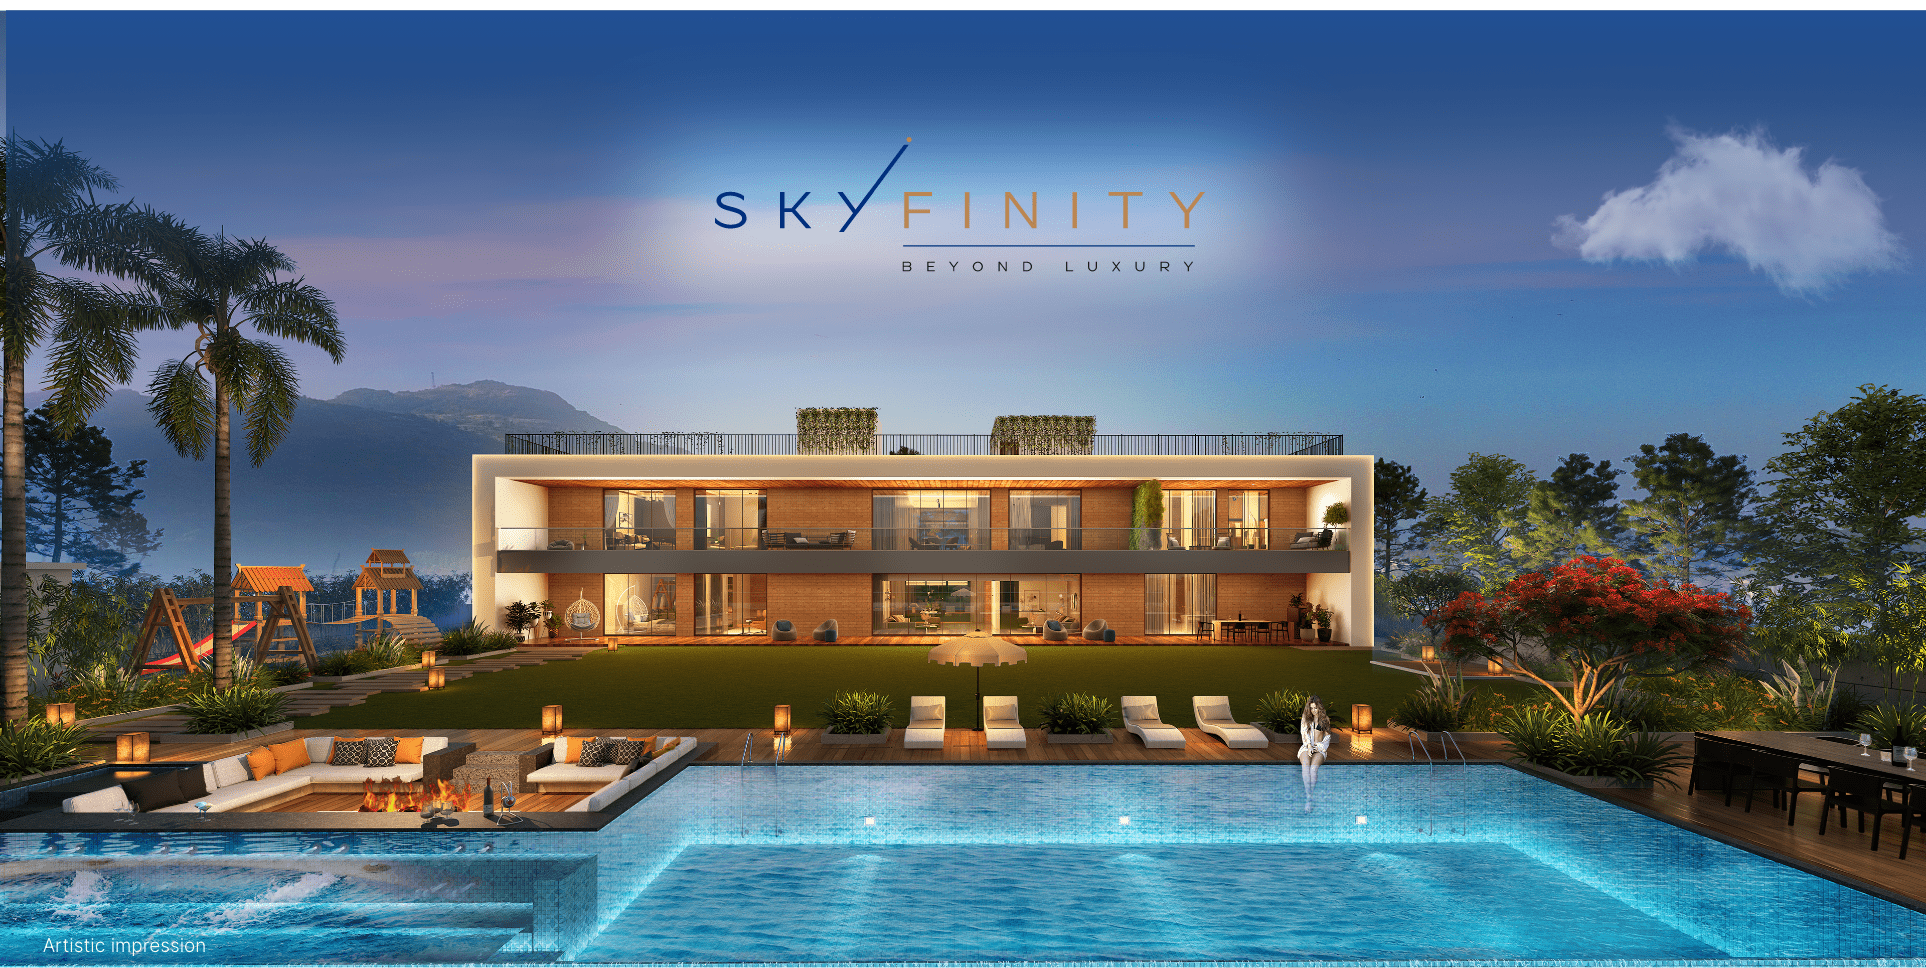 Skyfinity - The Pinnacle Of Opulent Villa Living